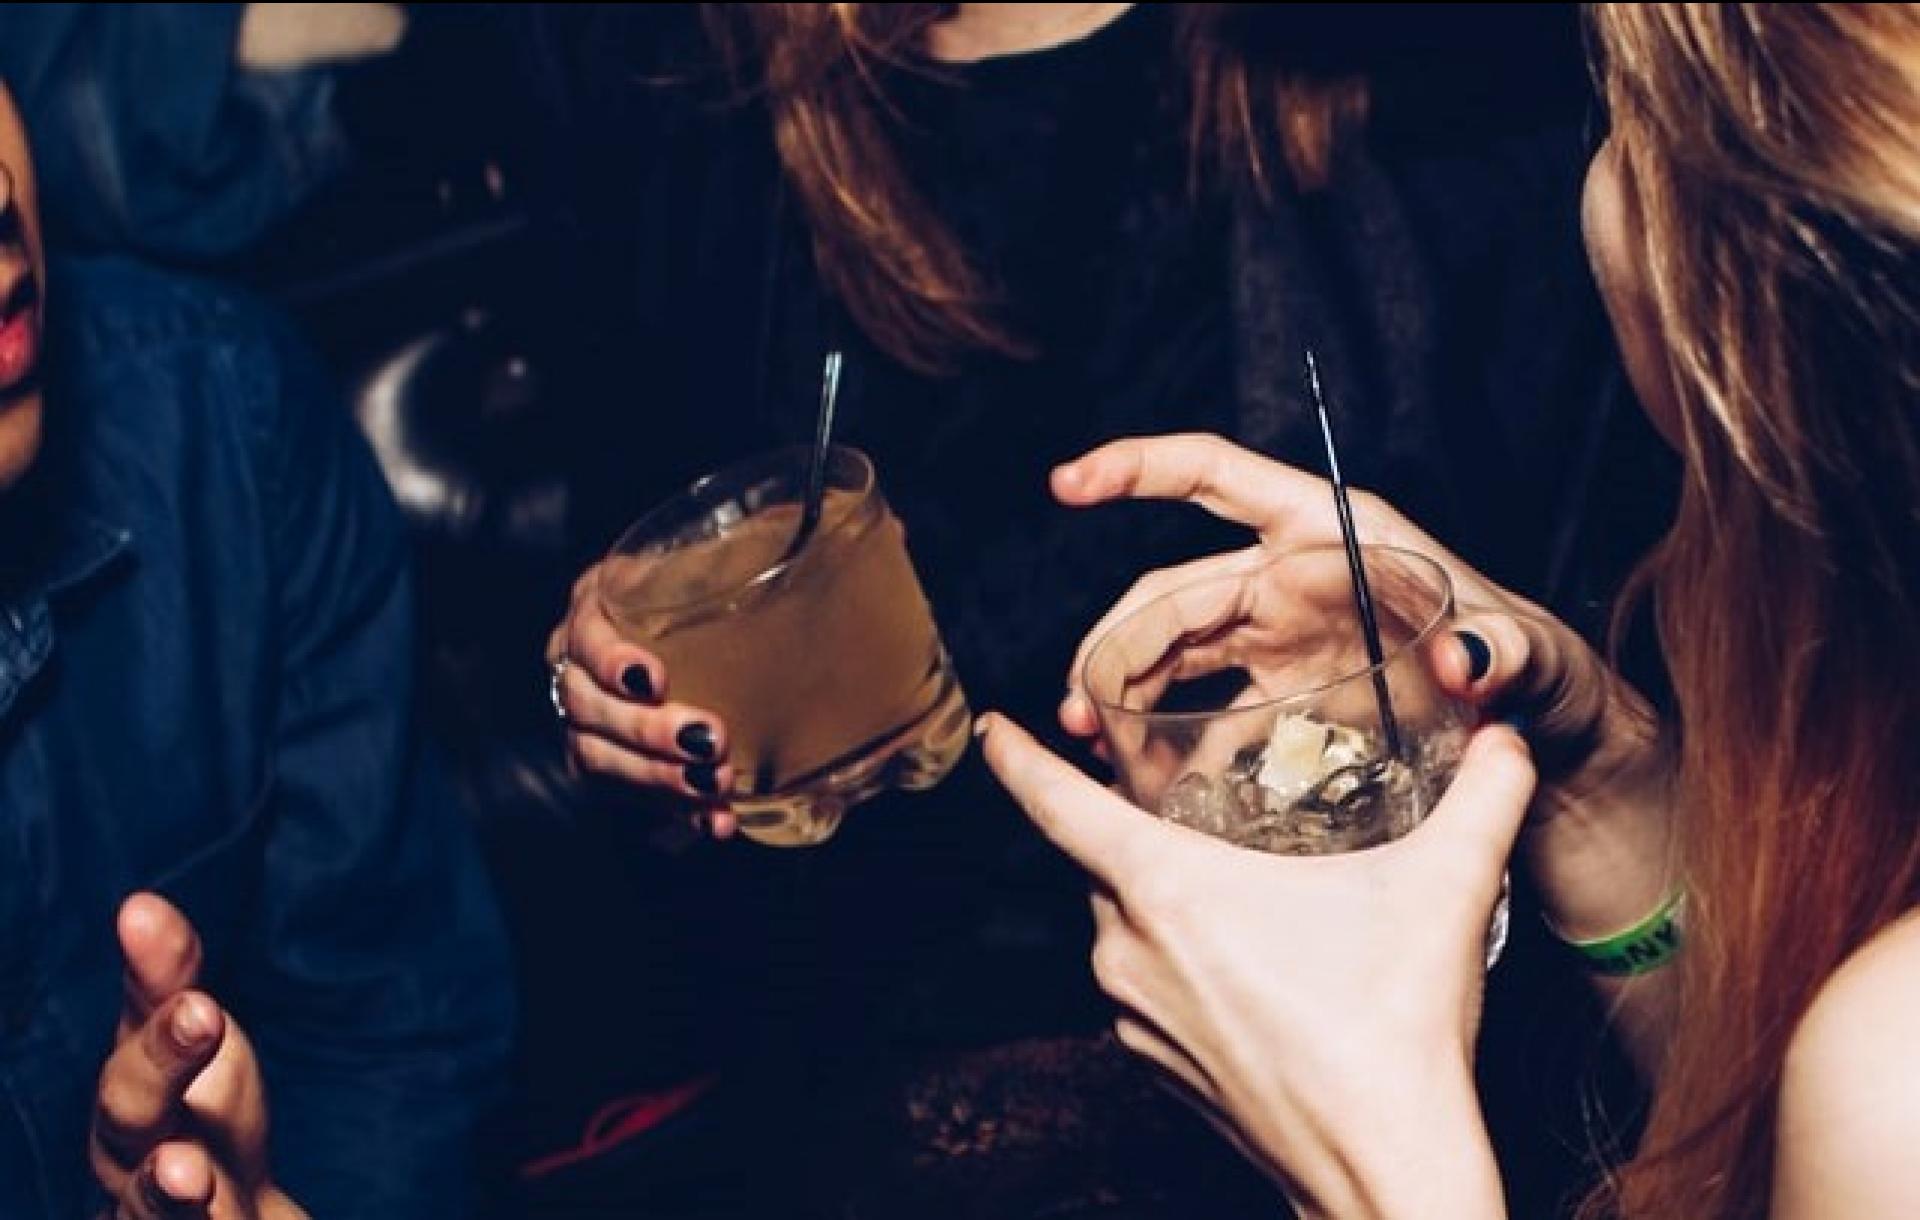 Drinks at a night club